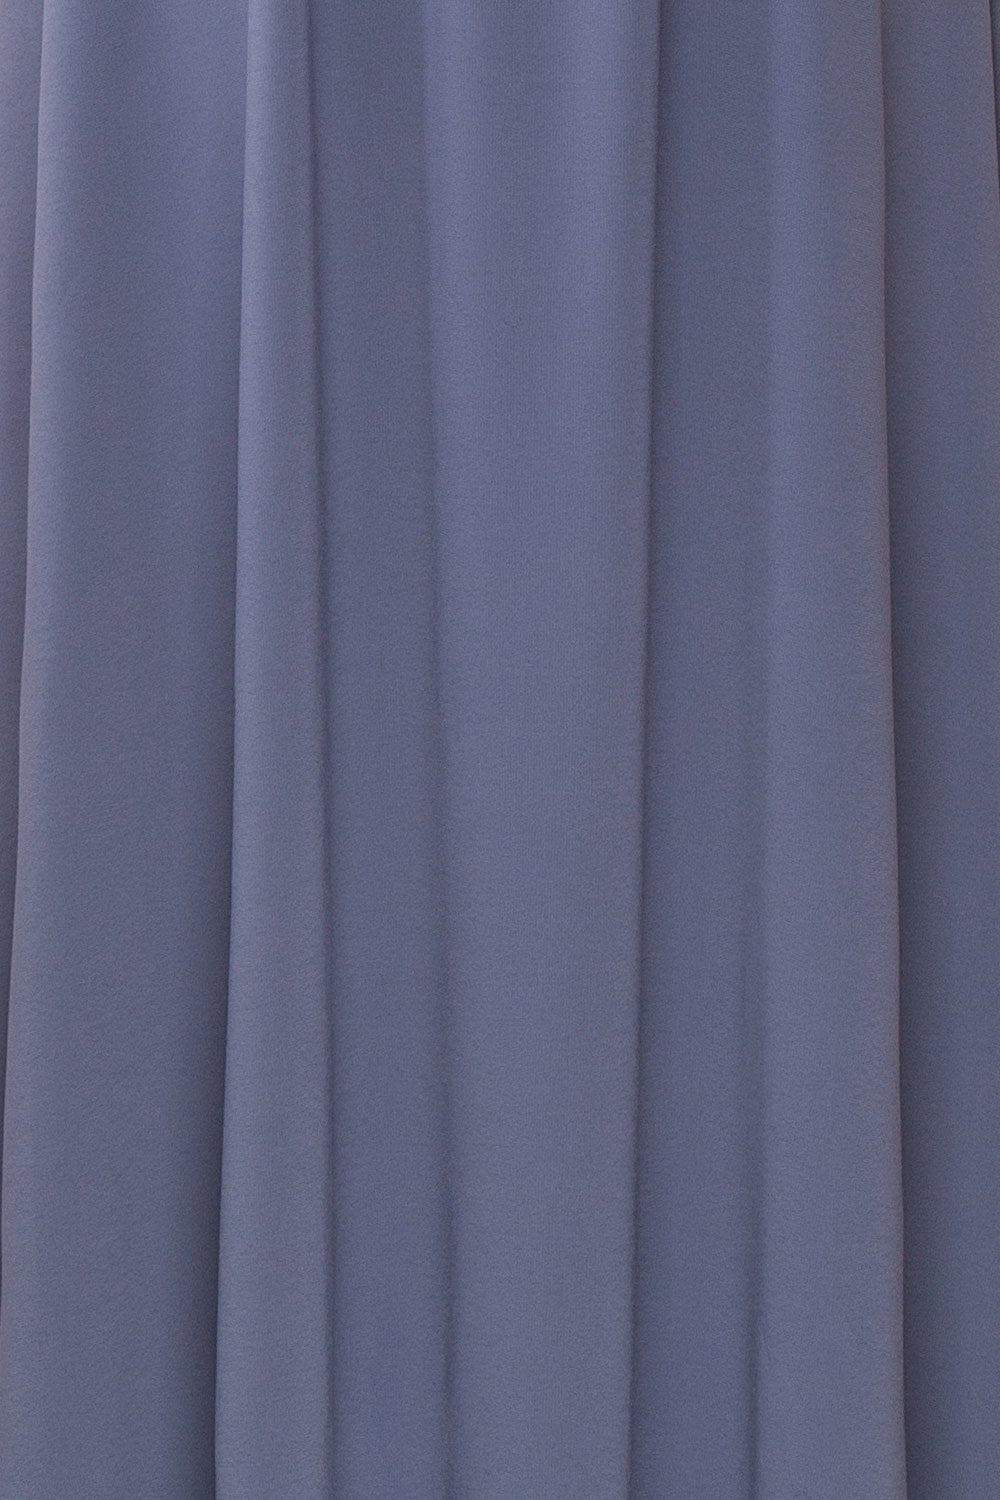 Glykeria Ocean Steel Blue Chiffon Maxi Skirt | Boutique 1861 9